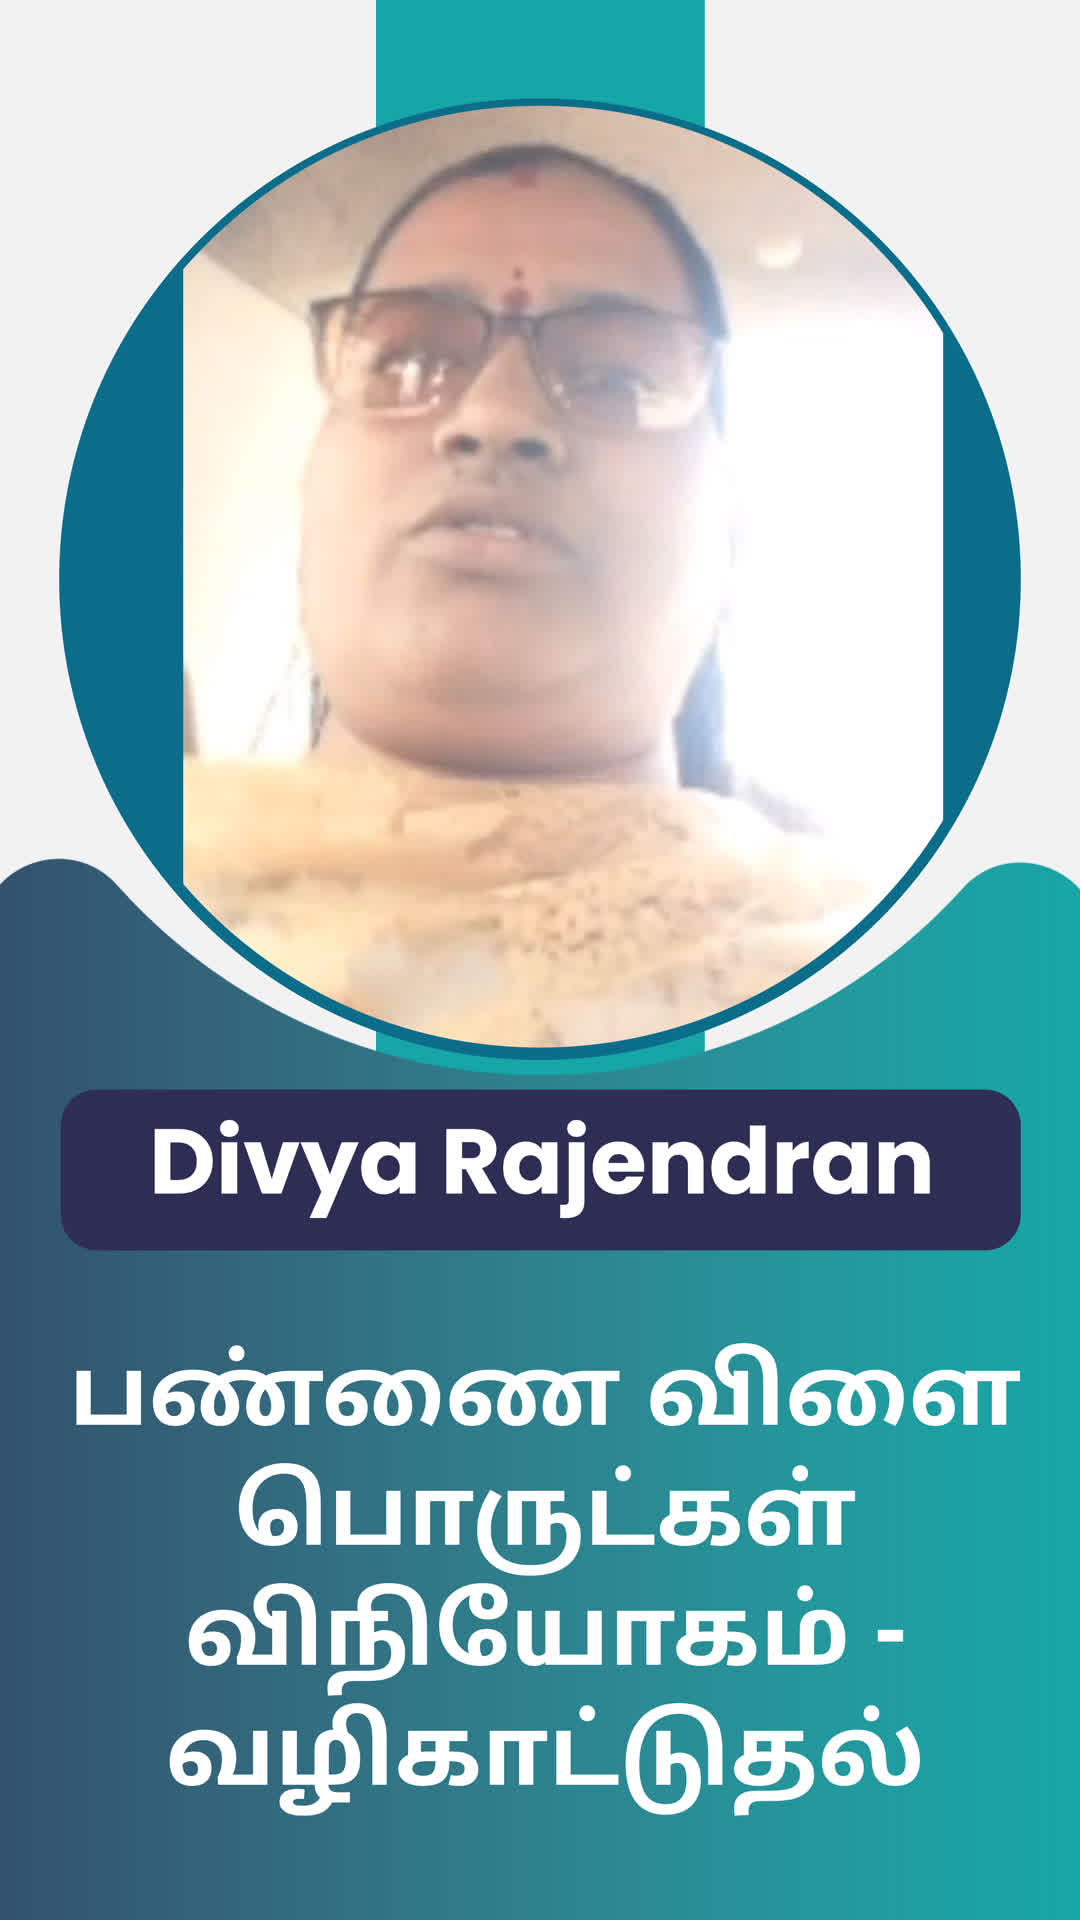 Divya Rajendran's Honest Review of ffreedom app - Chennai ,Tamil Nadu